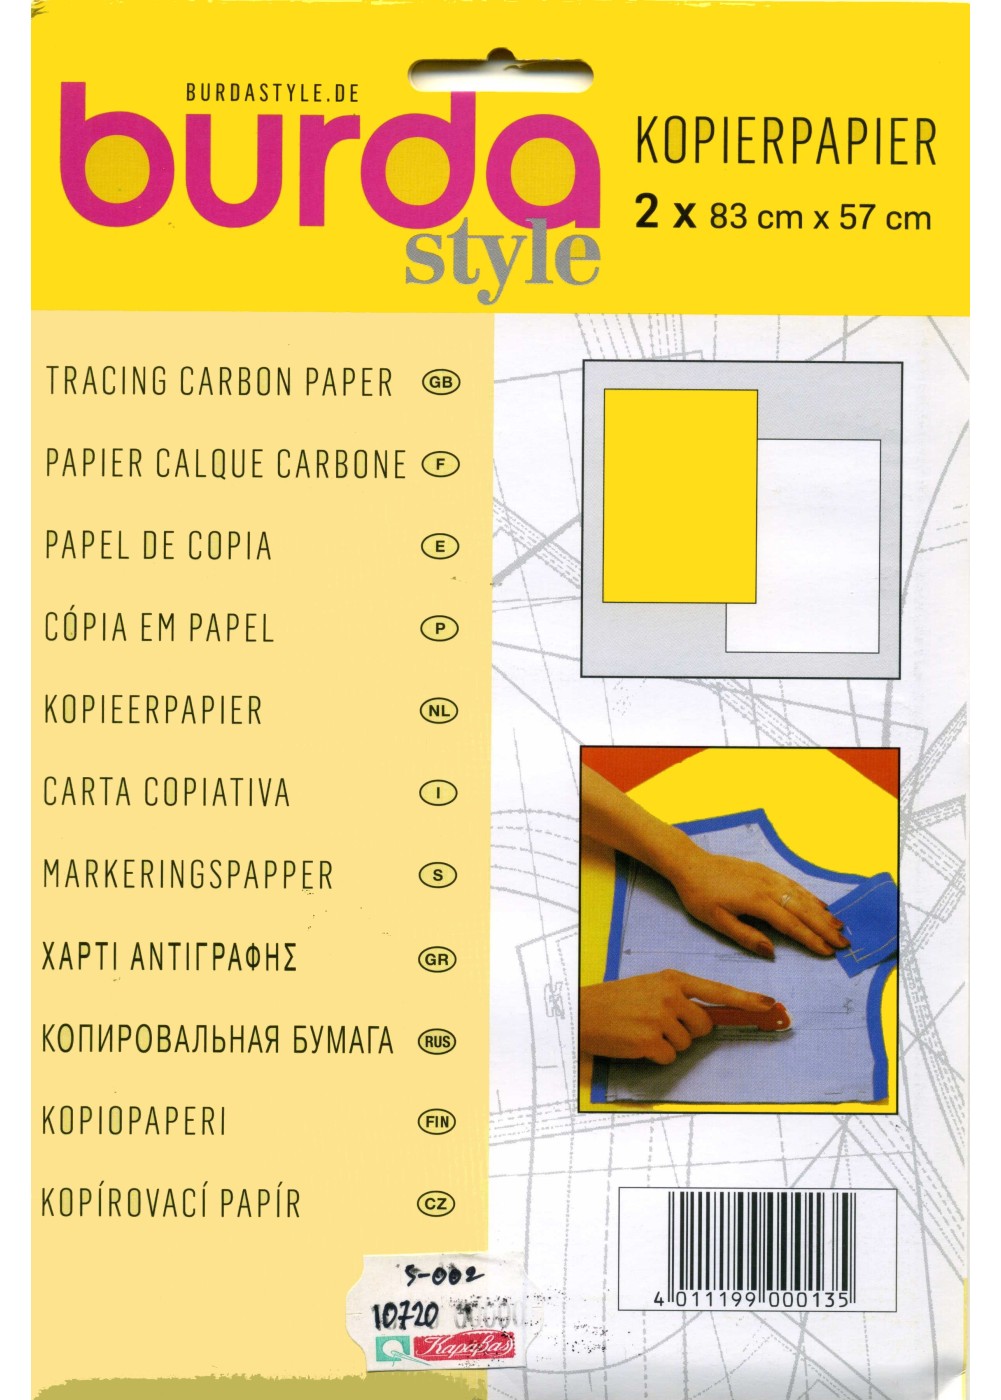 COPY PAPER YELLOW / WHITE ( BURDA )